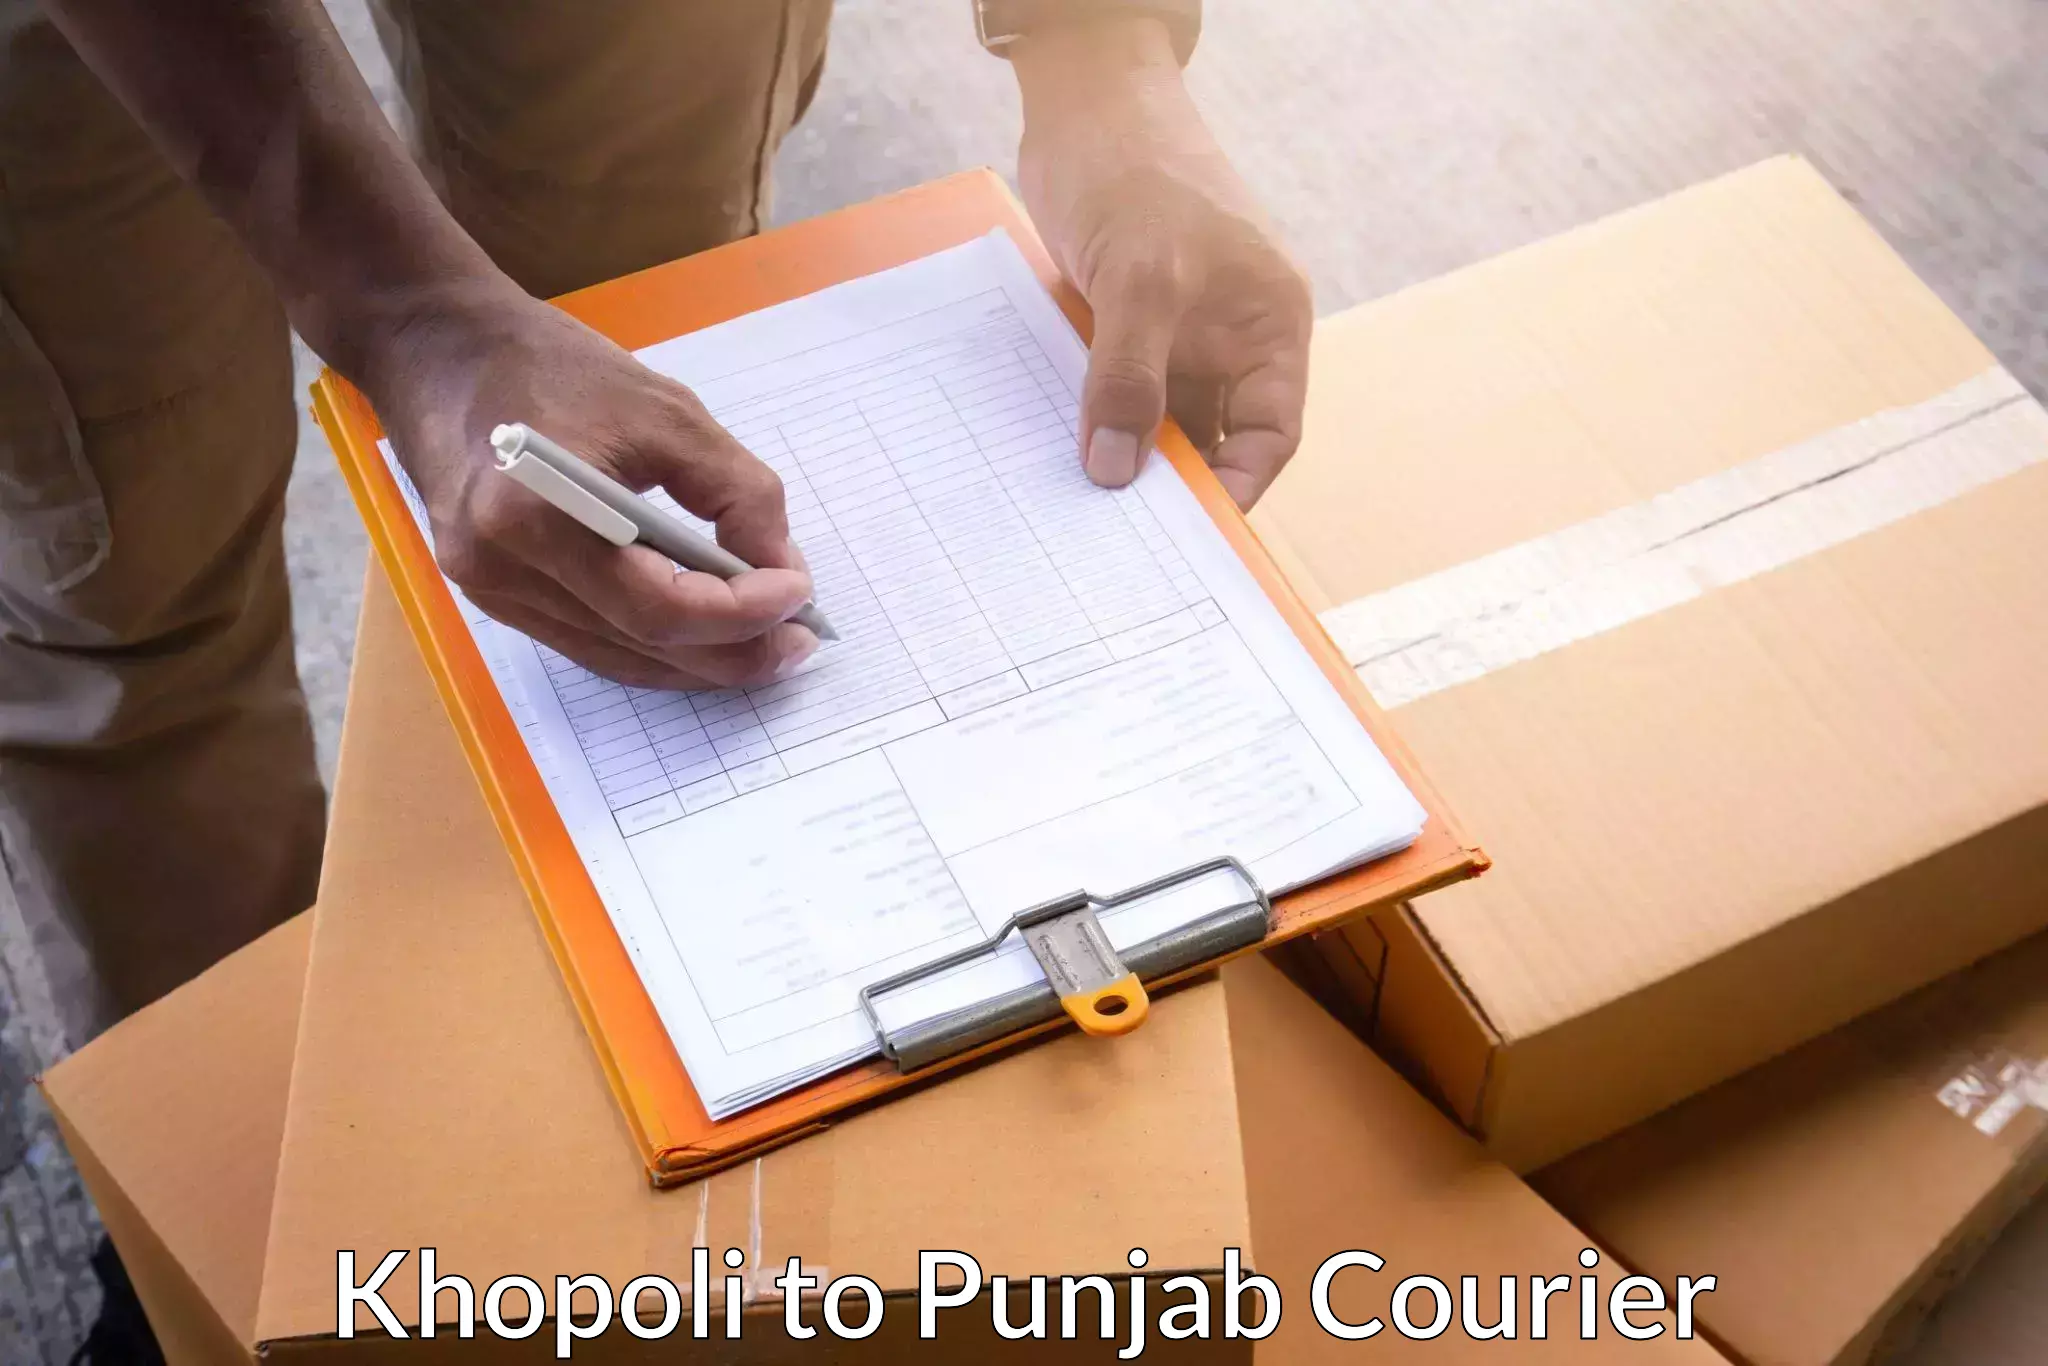 User-friendly courier app Khopoli to Ajnala